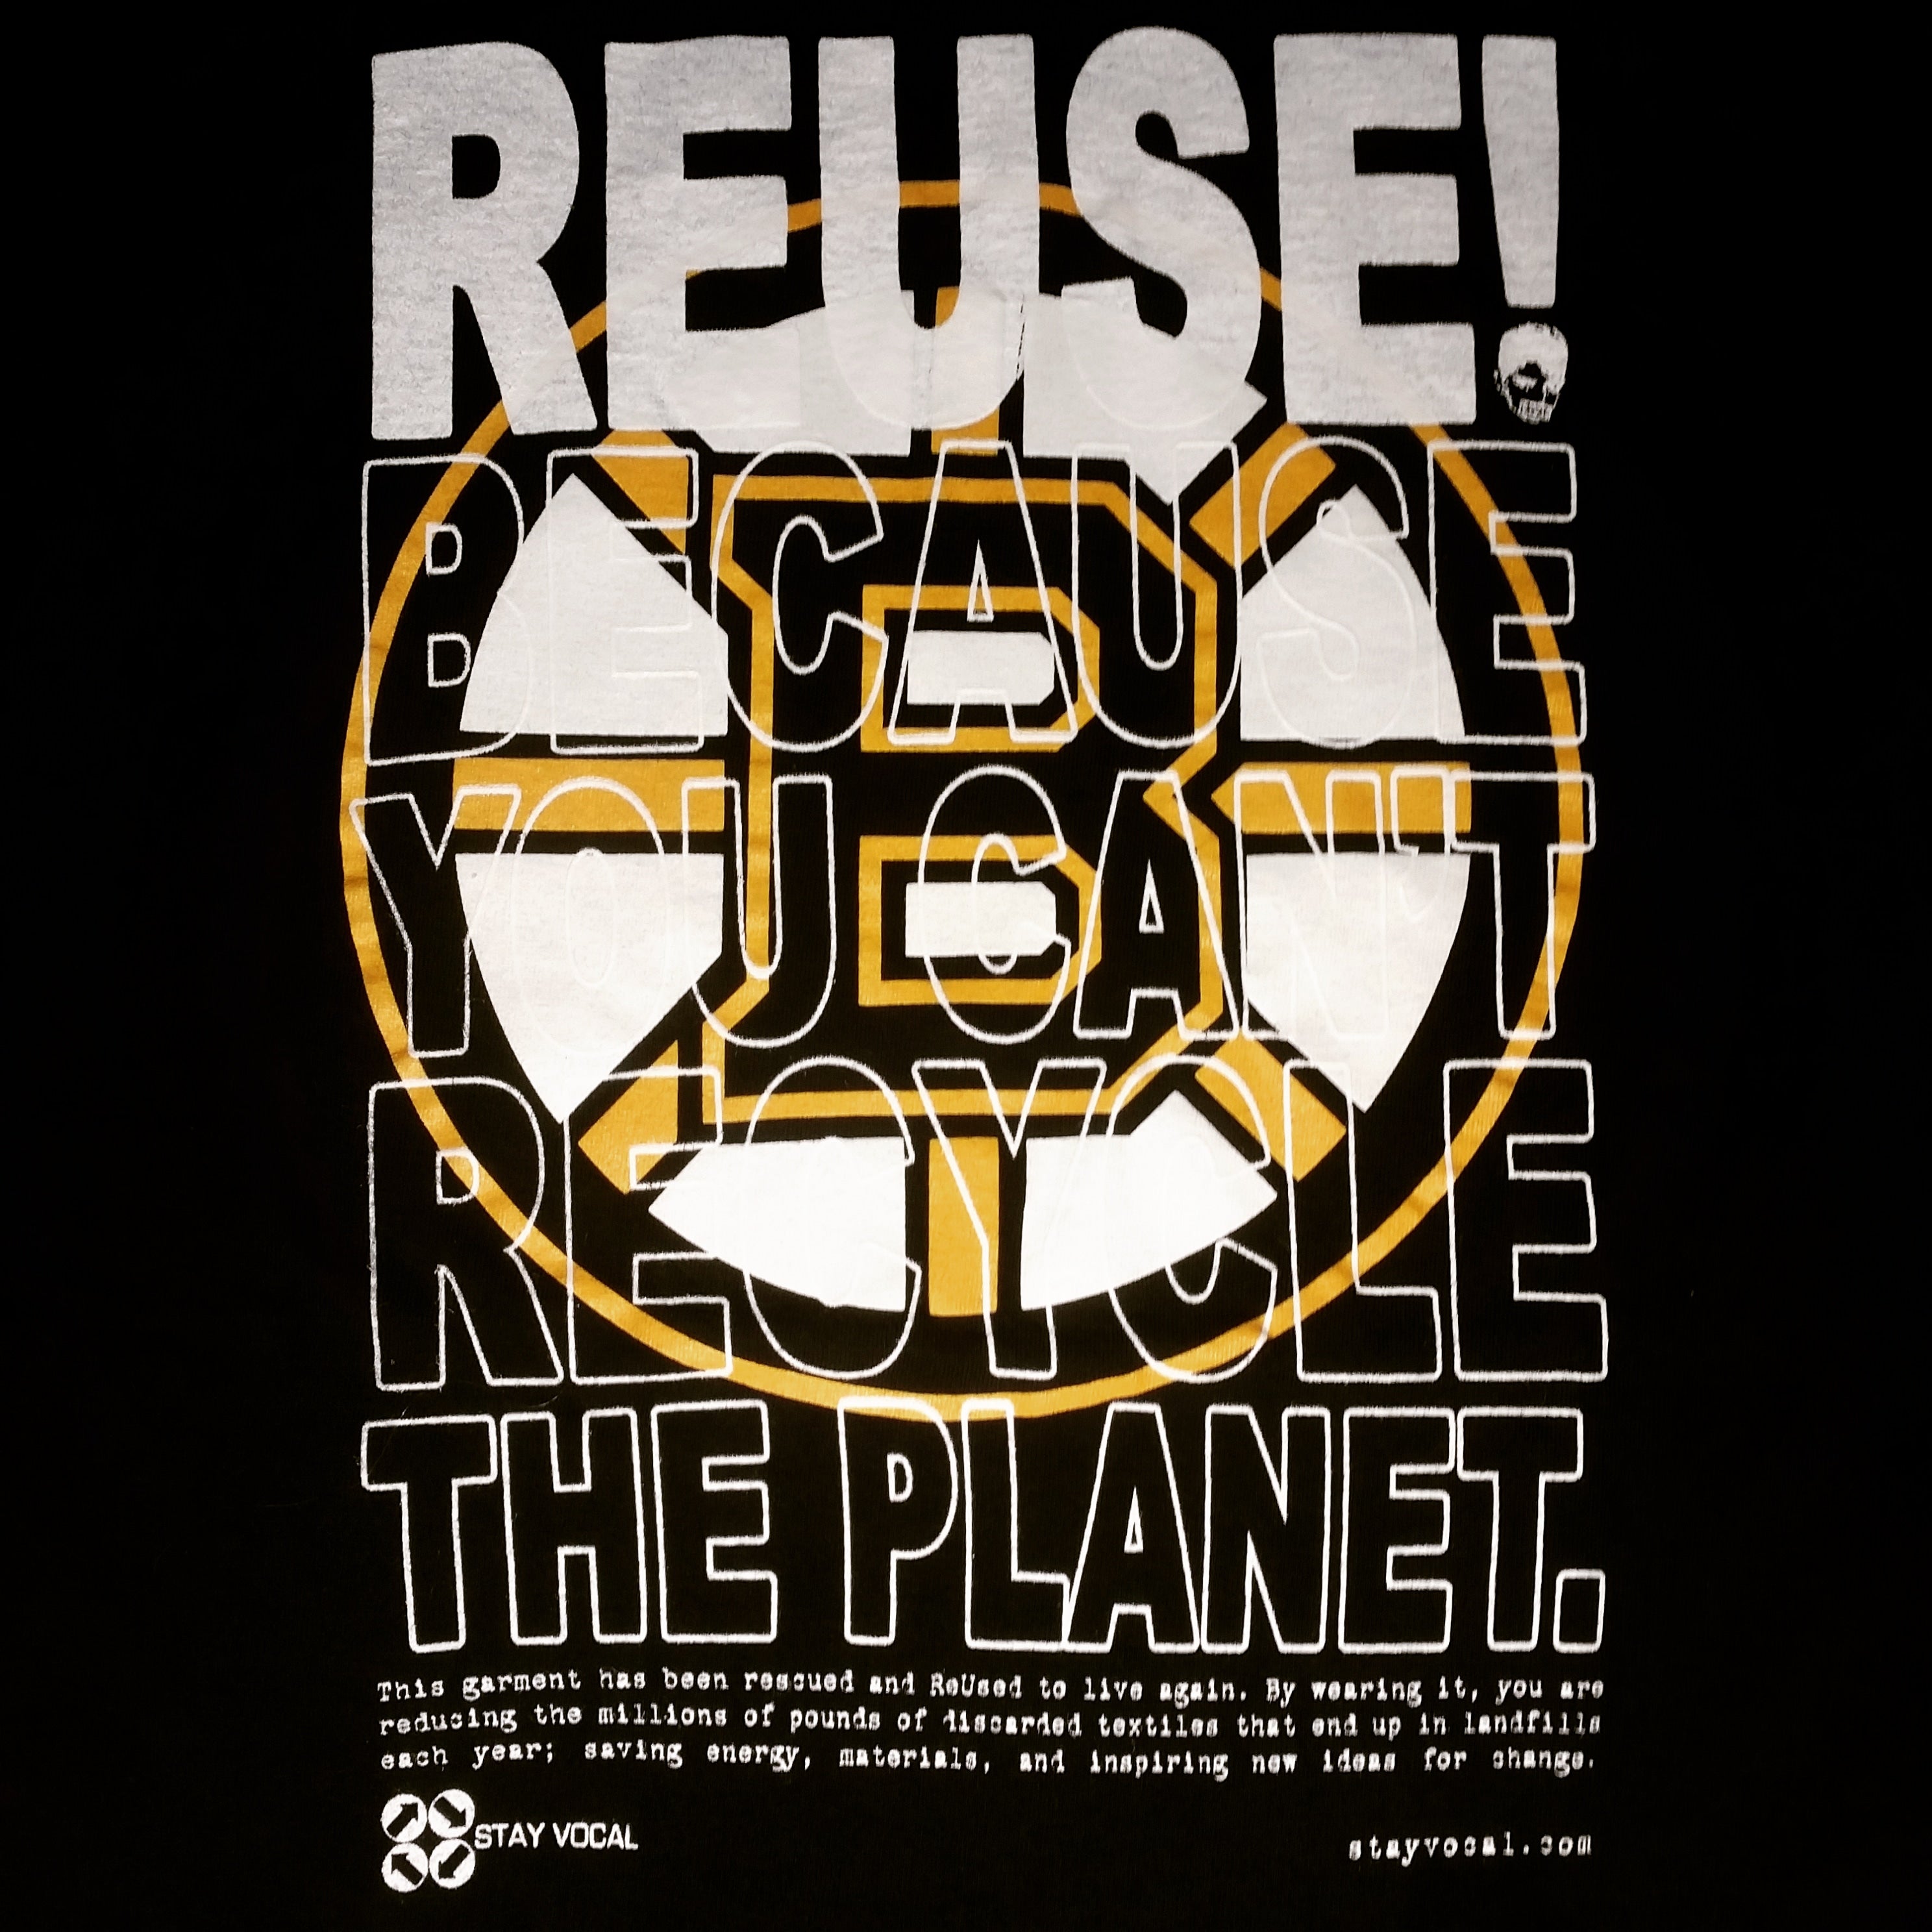 One of a Kind (Men's L) REUSE! Boston Bruins Logo T-Shirt